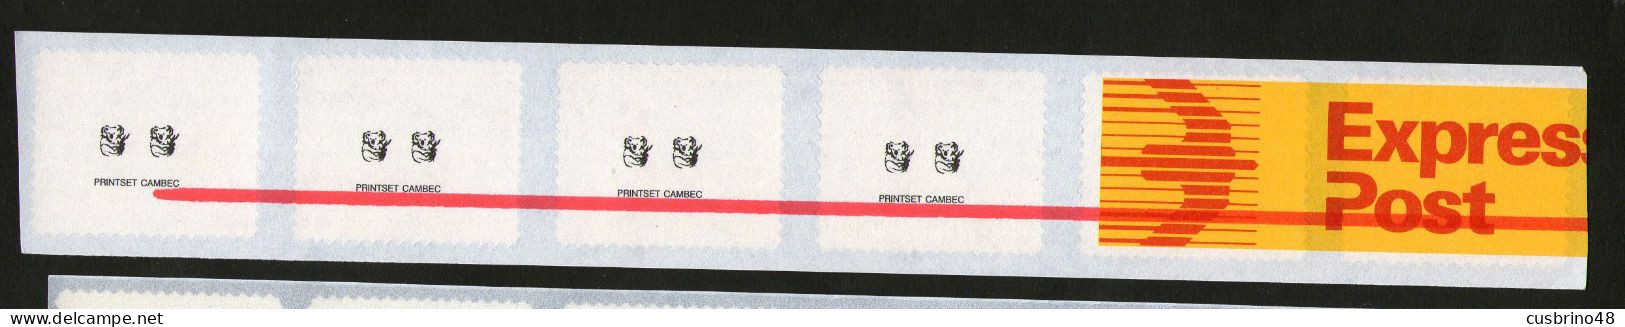 AUSTRALIA 1992 P&S Strip 6 45c Endangered Species PRINTSET 2 Koala - Express Post + RED LINE End Of Roll. Lot AUS 324 - Mint Stamps